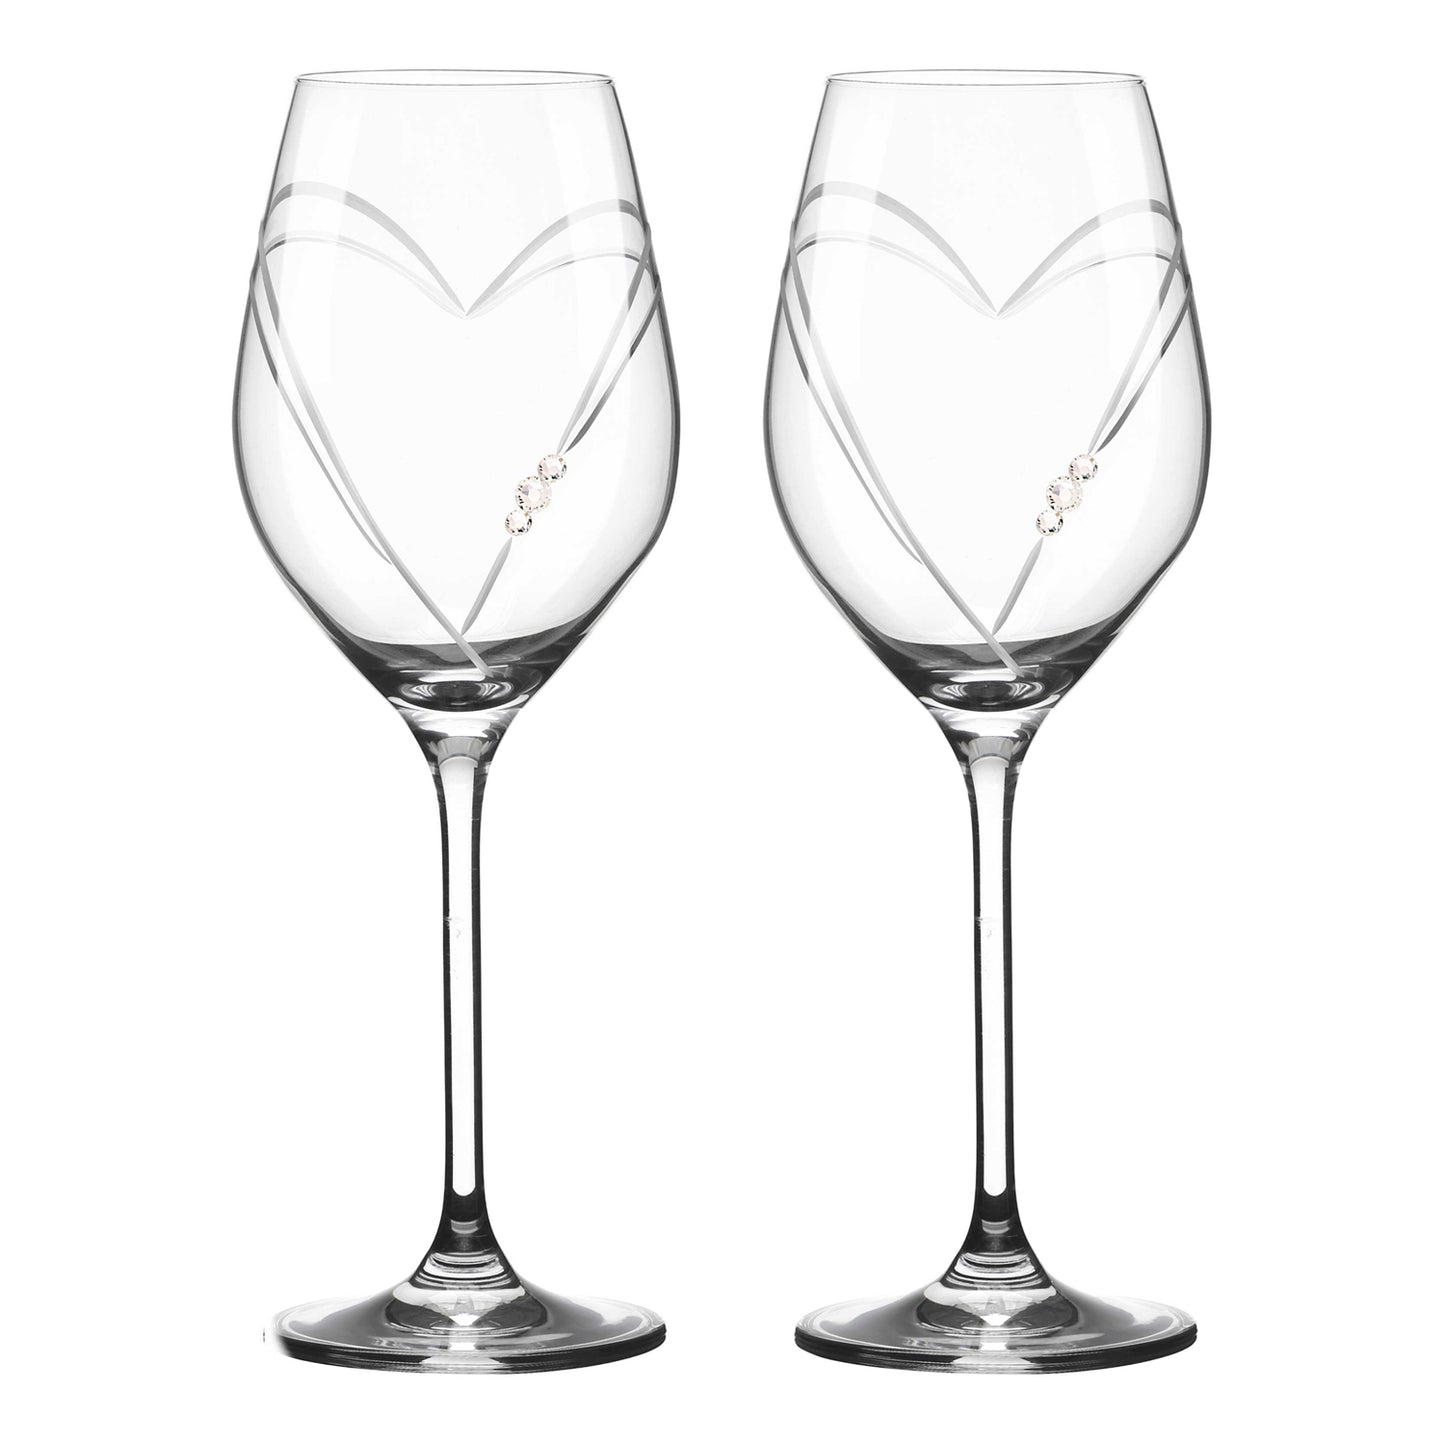 Matrivo White wine glass with Swarovski crystals - 2 pcs. Two Hearts